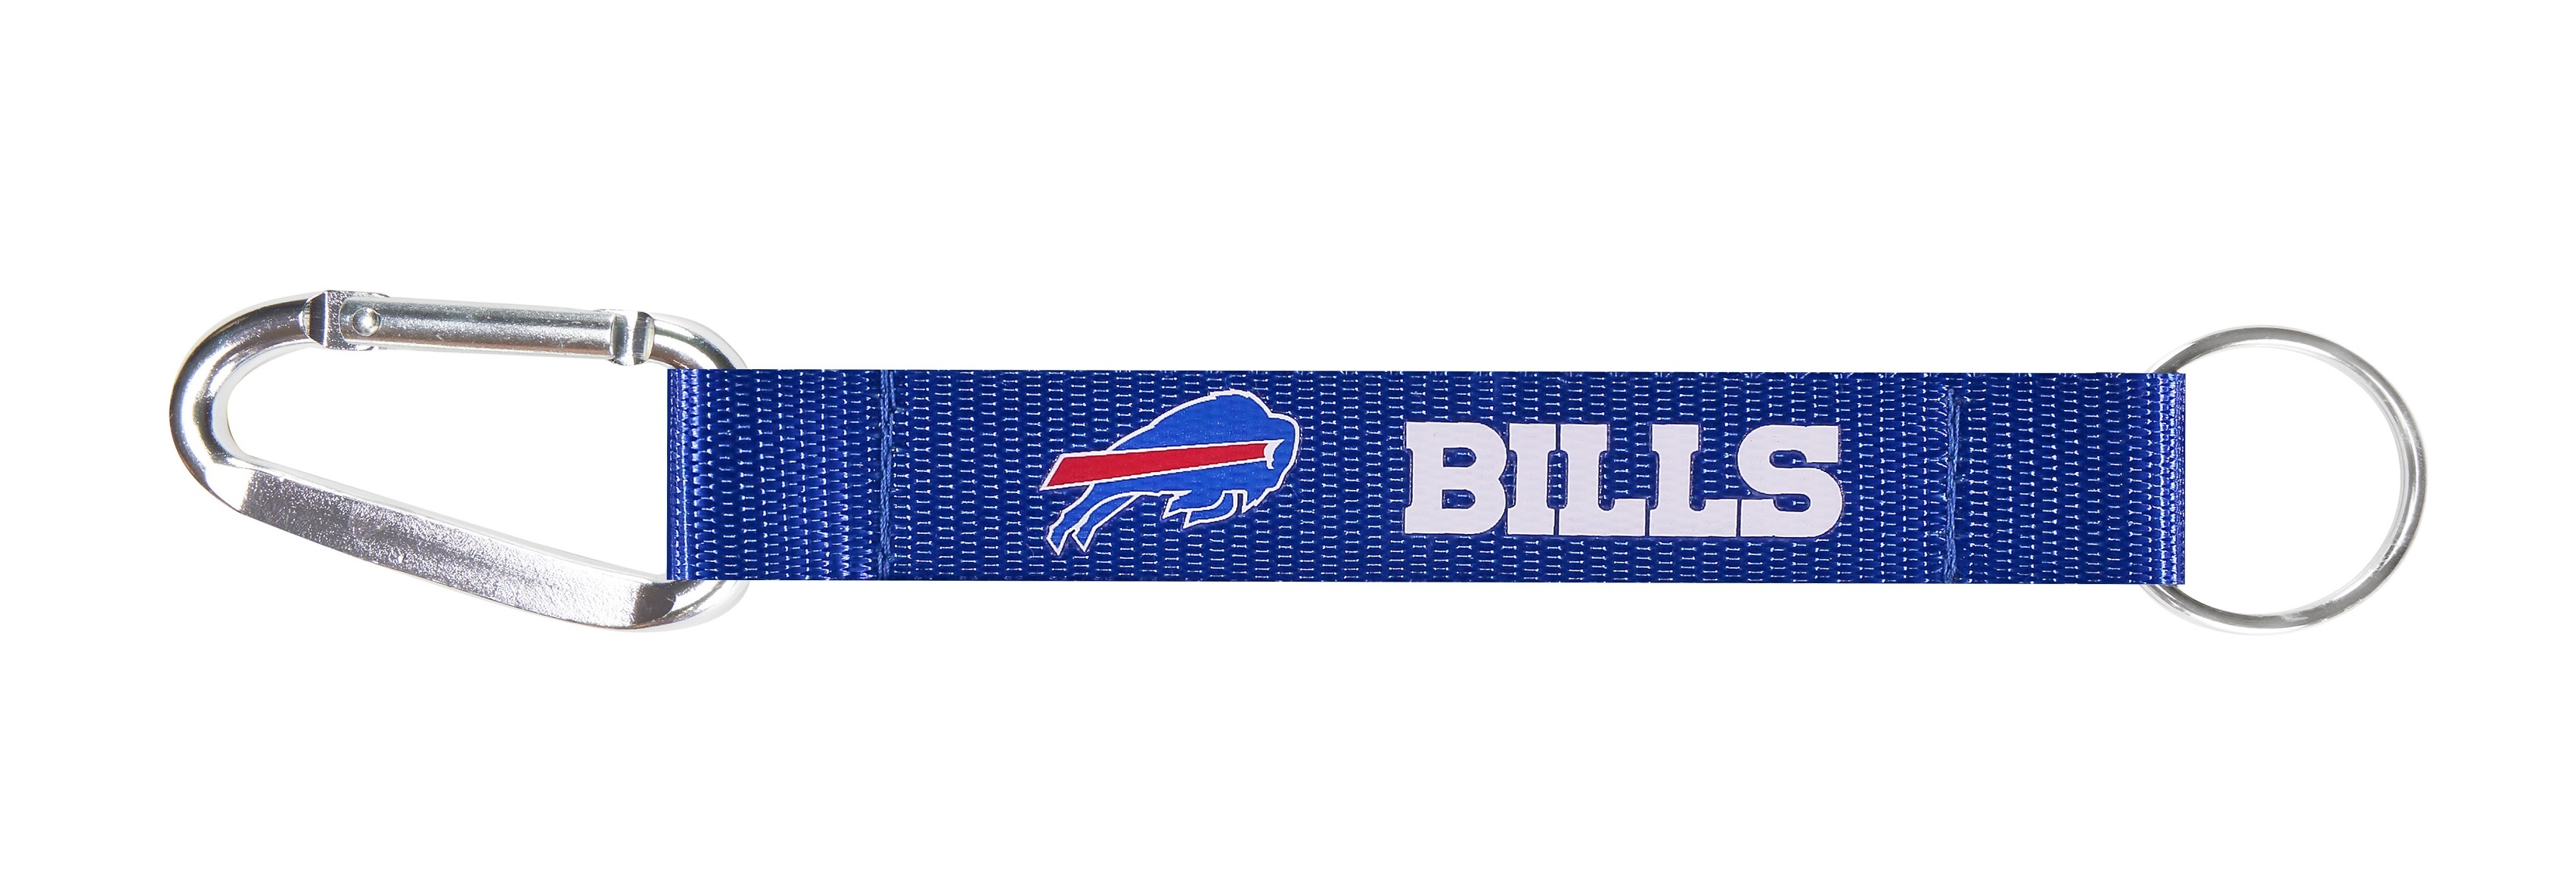 NFL Buffalo Bills K/C Carabiner Lanyard